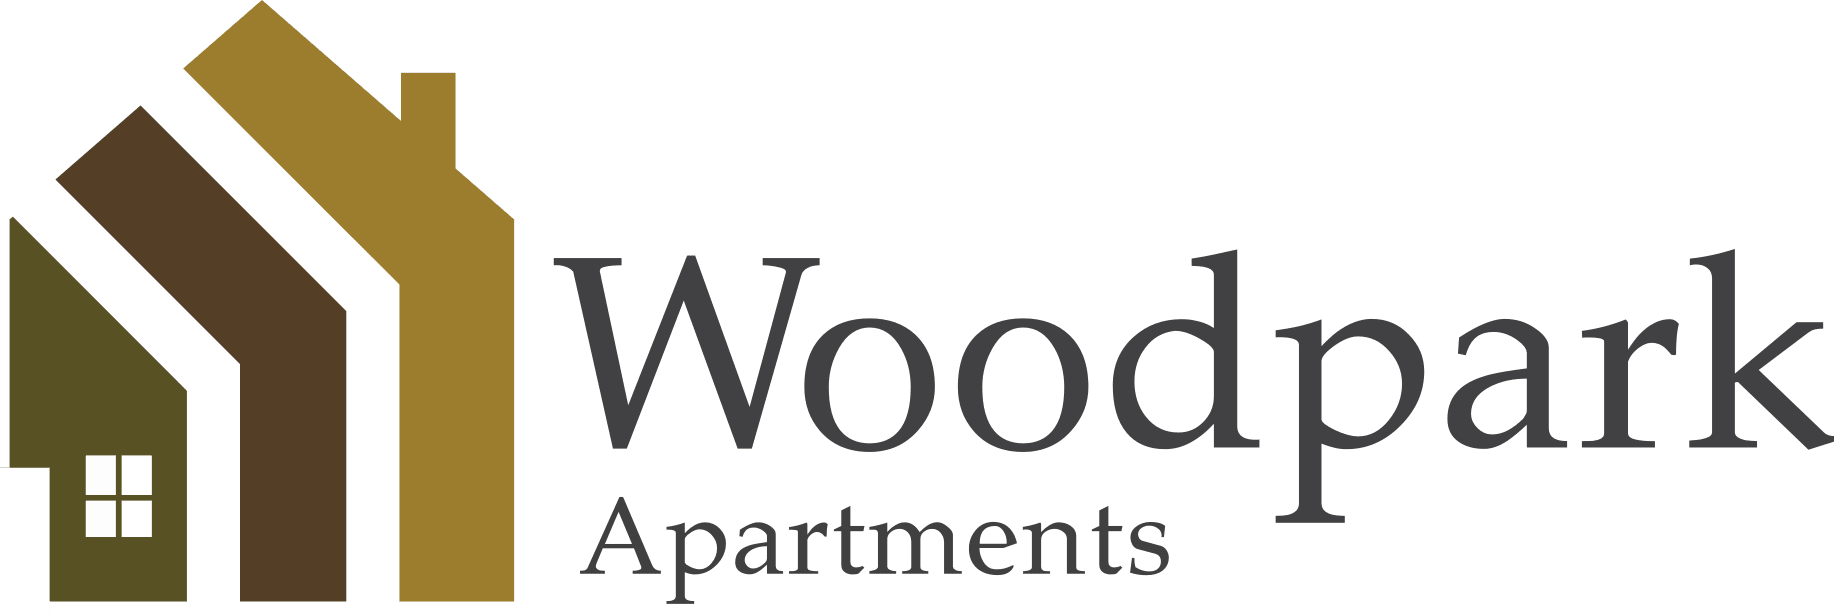 Woodpark Apartments